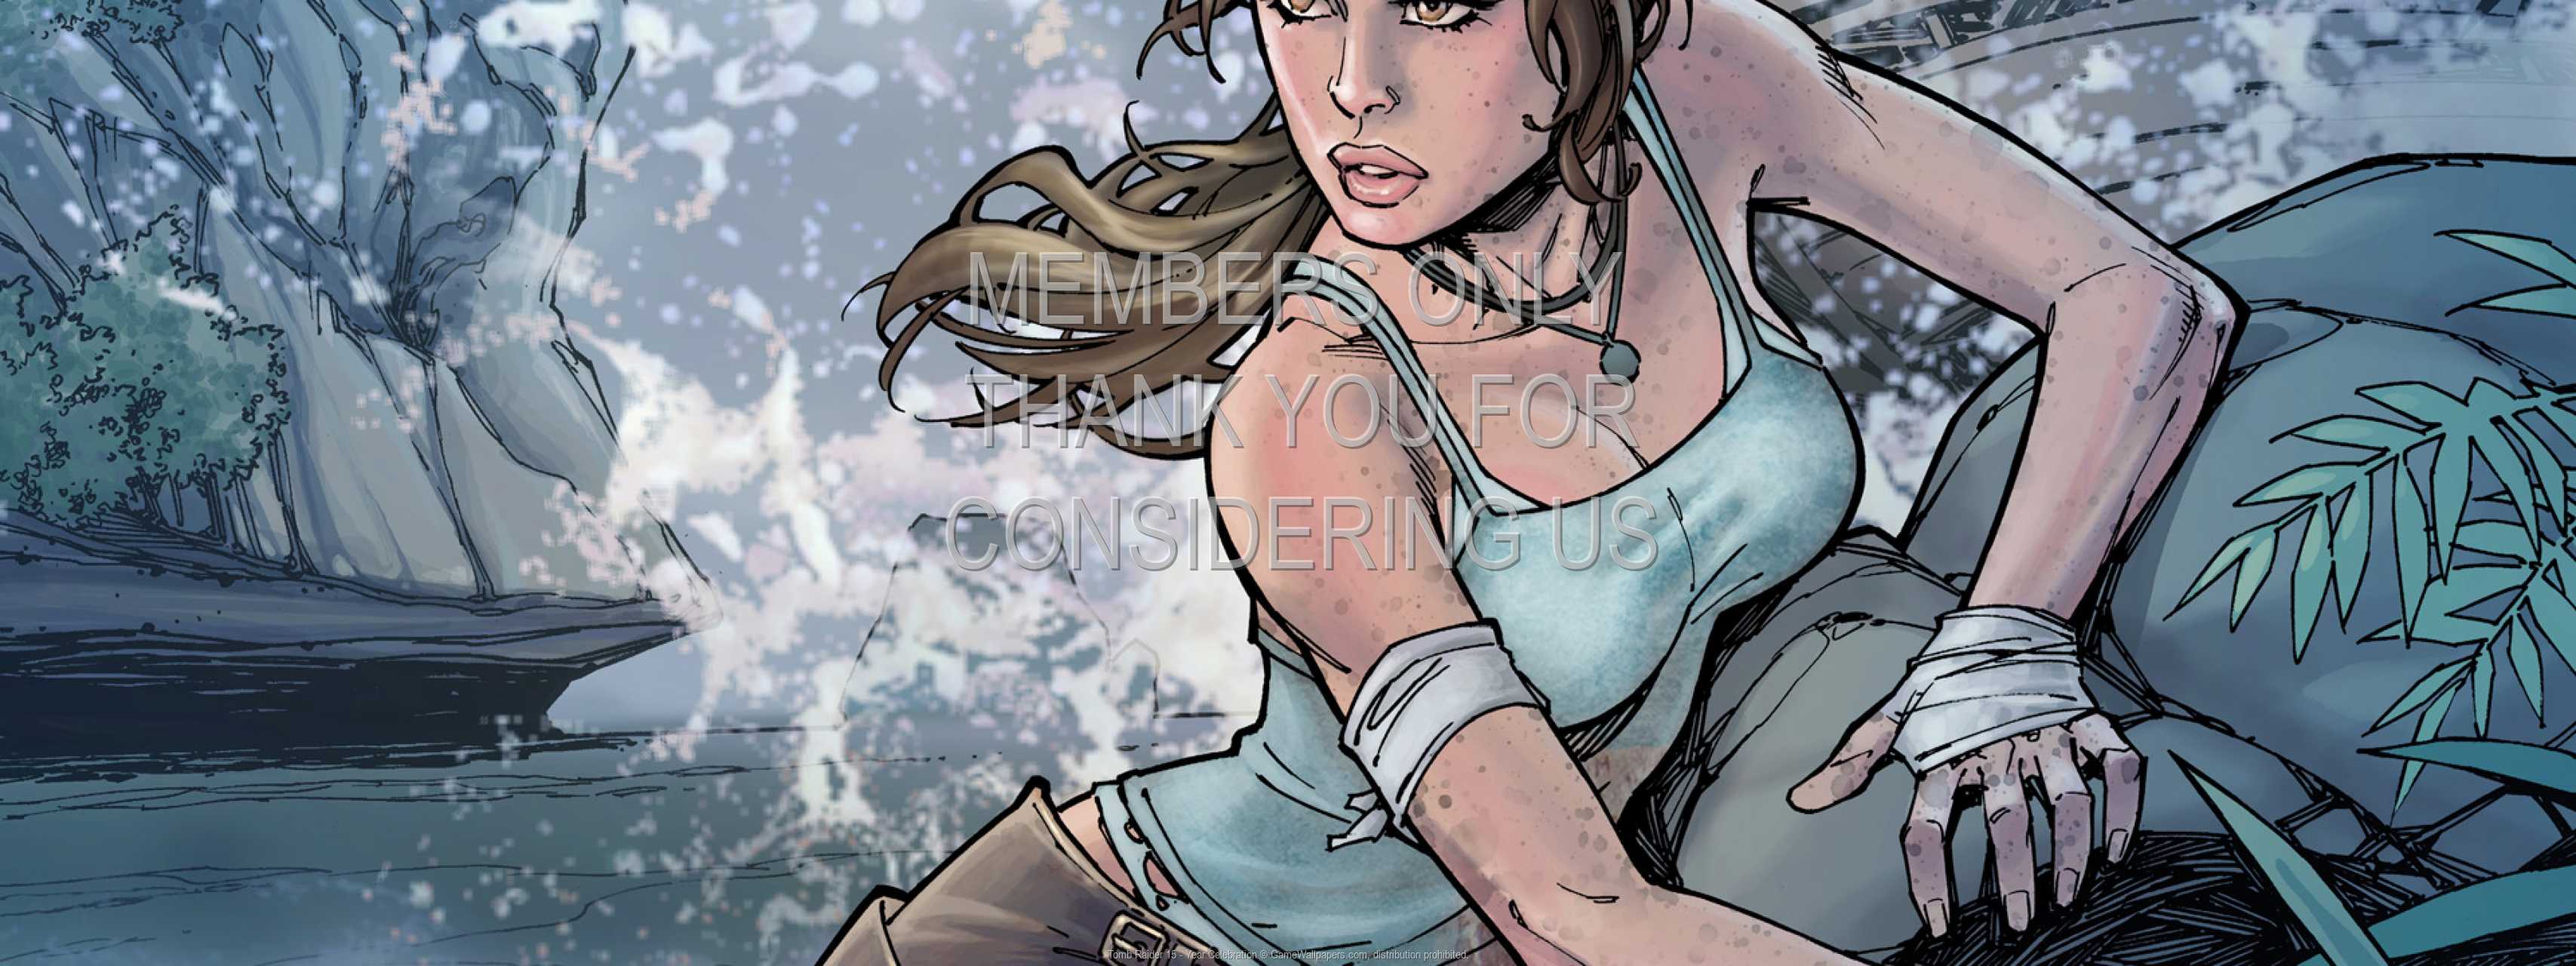 Tomb Raider 15 - Year Celebration 720p Horizontal Mobile wallpaper or background 02